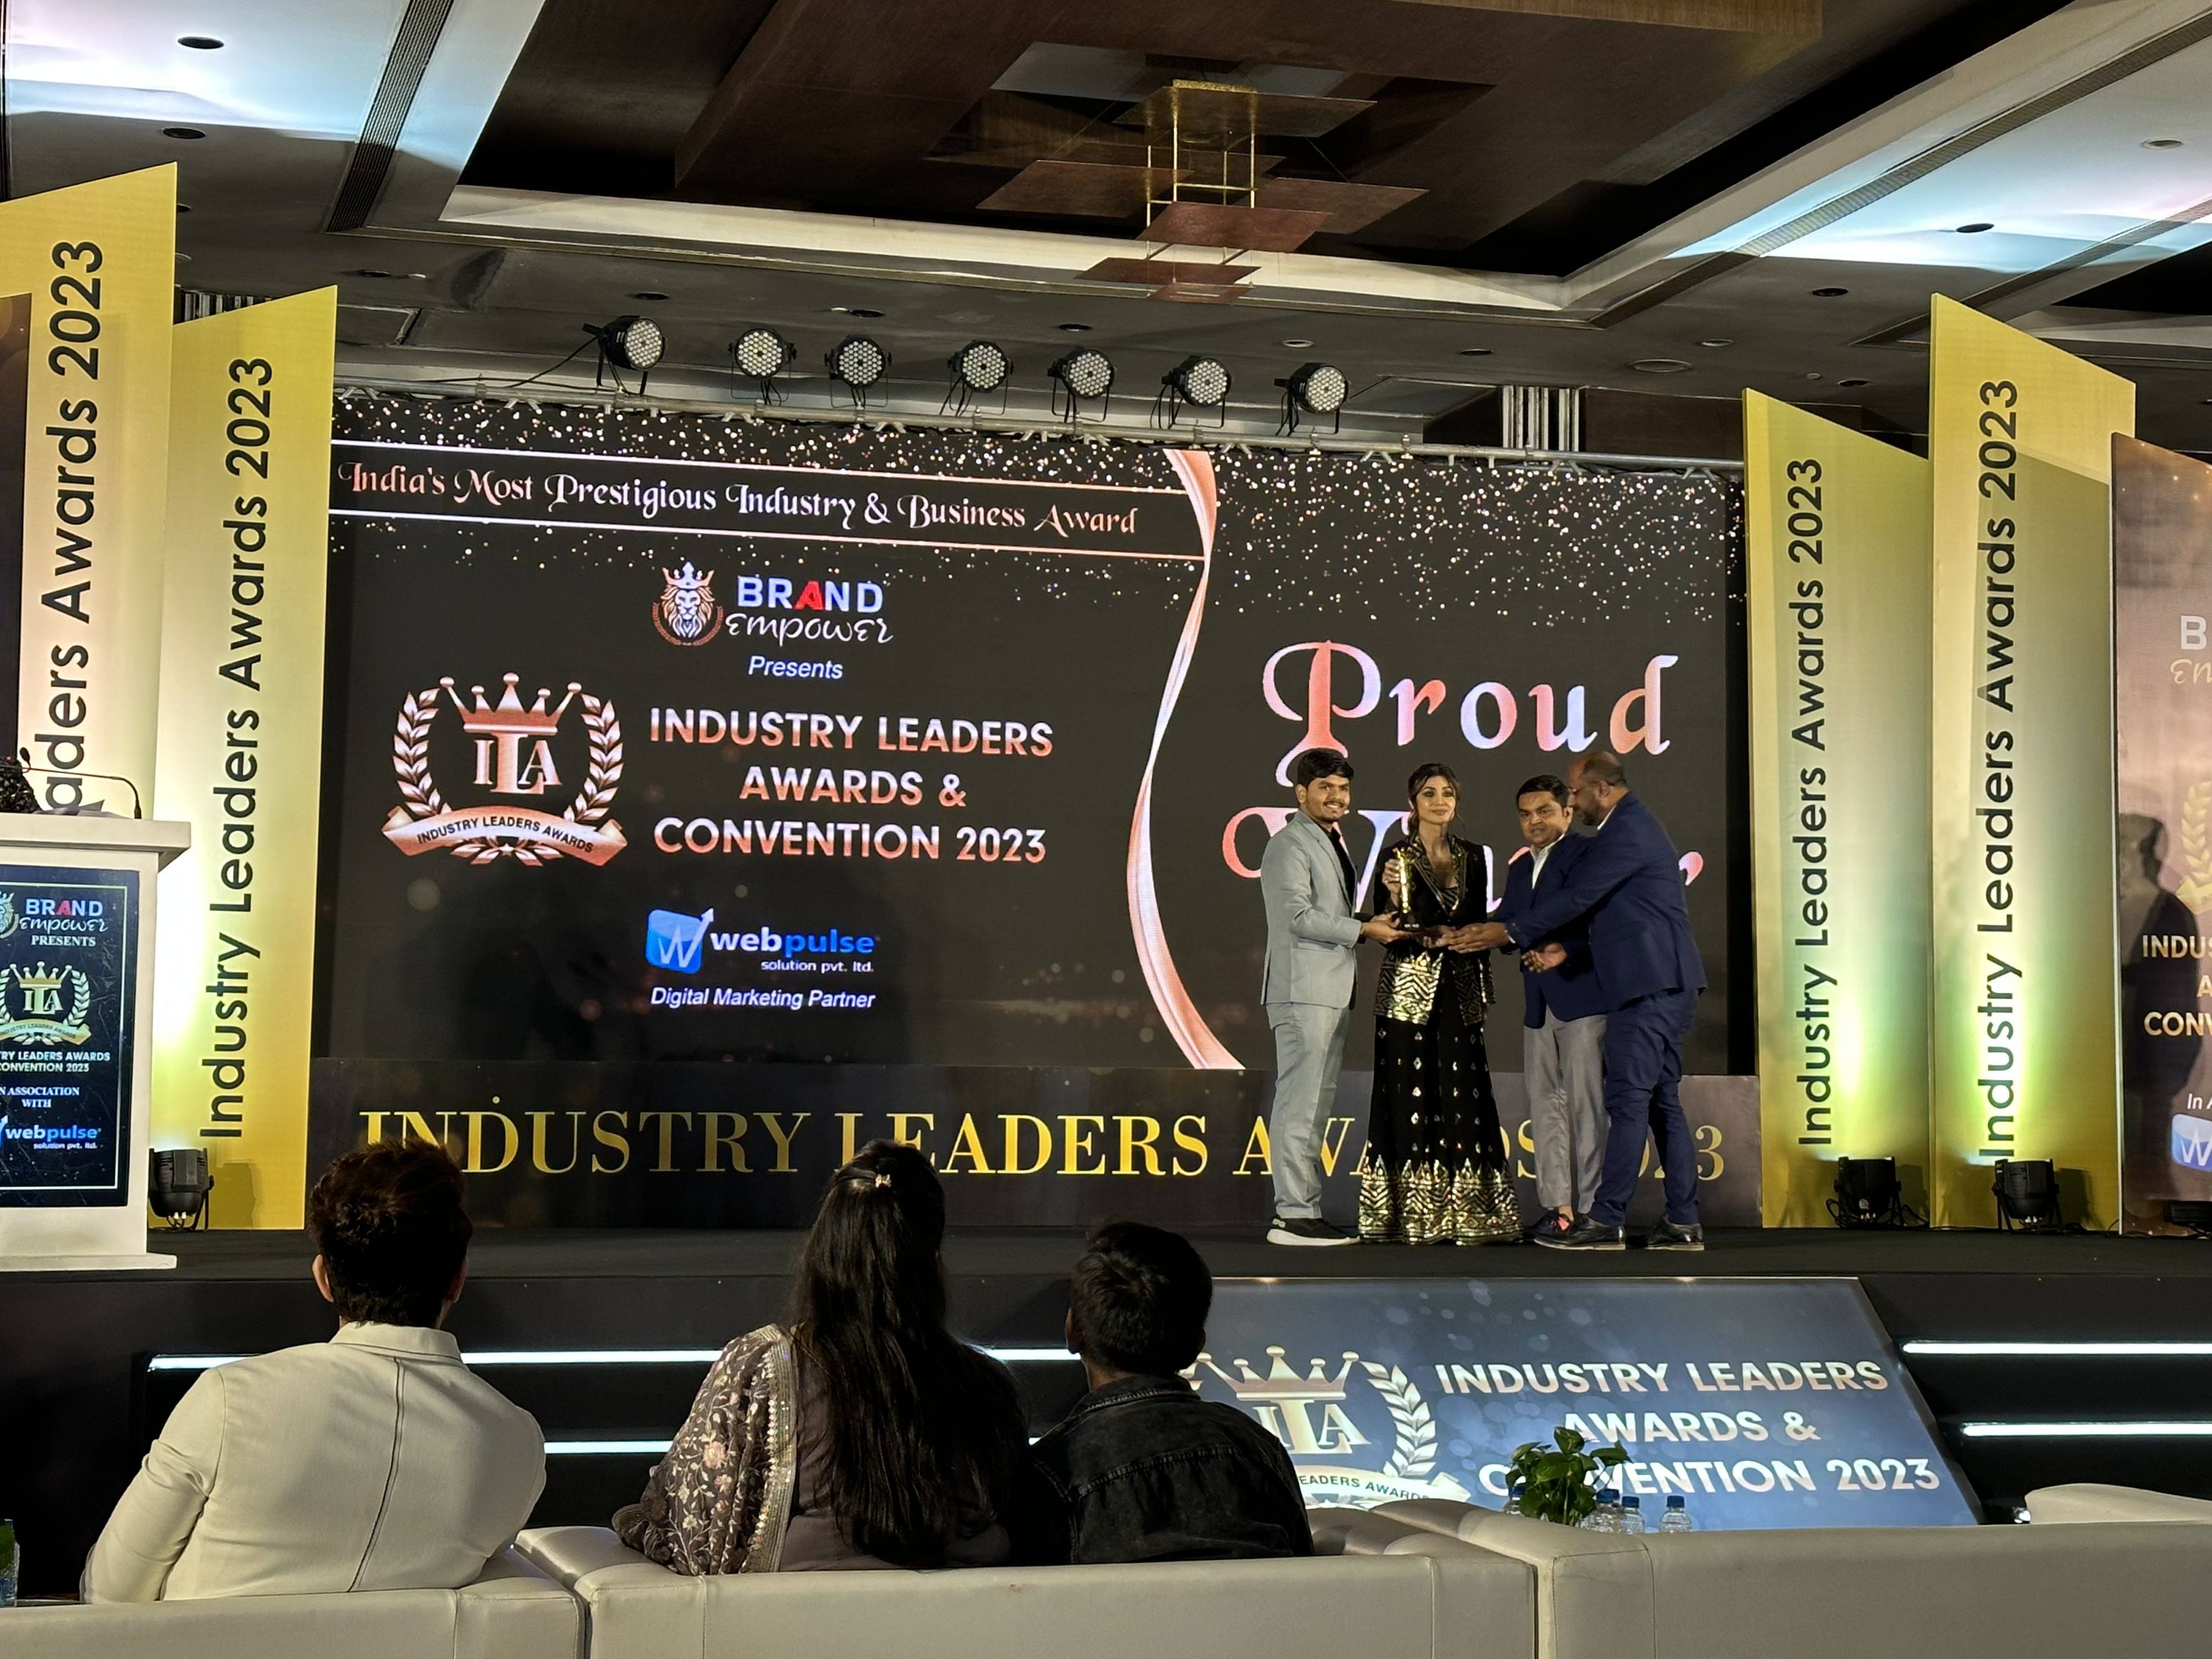 Industry Leaders Awards 2023 (ILA 2023)